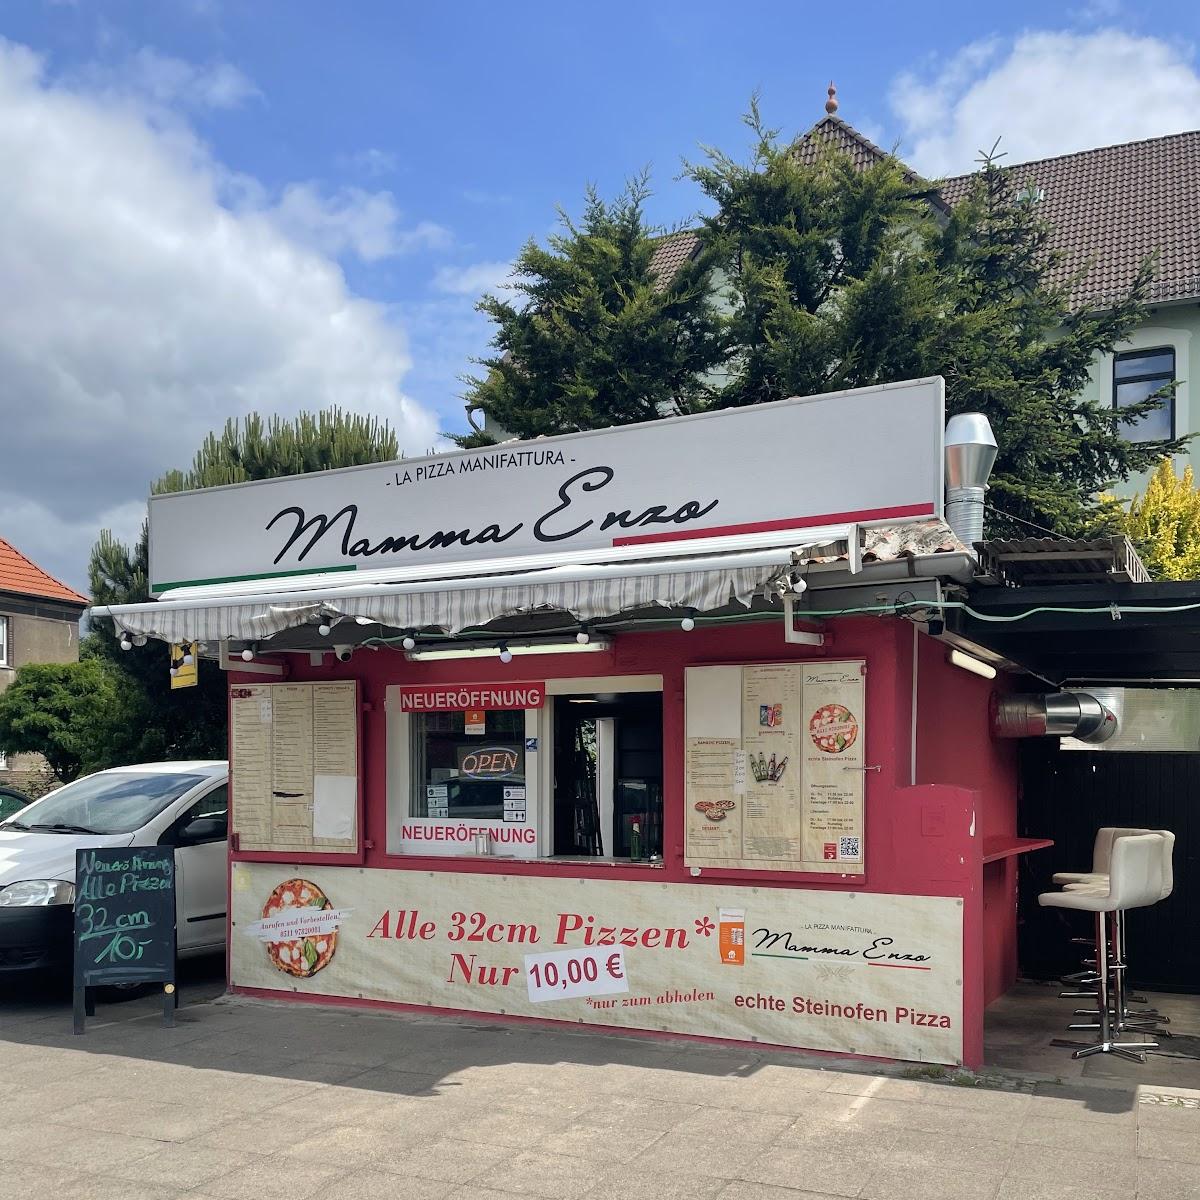 Restaurant "Mamma Enzo - Steinofenpizza Hannover" in Hannover